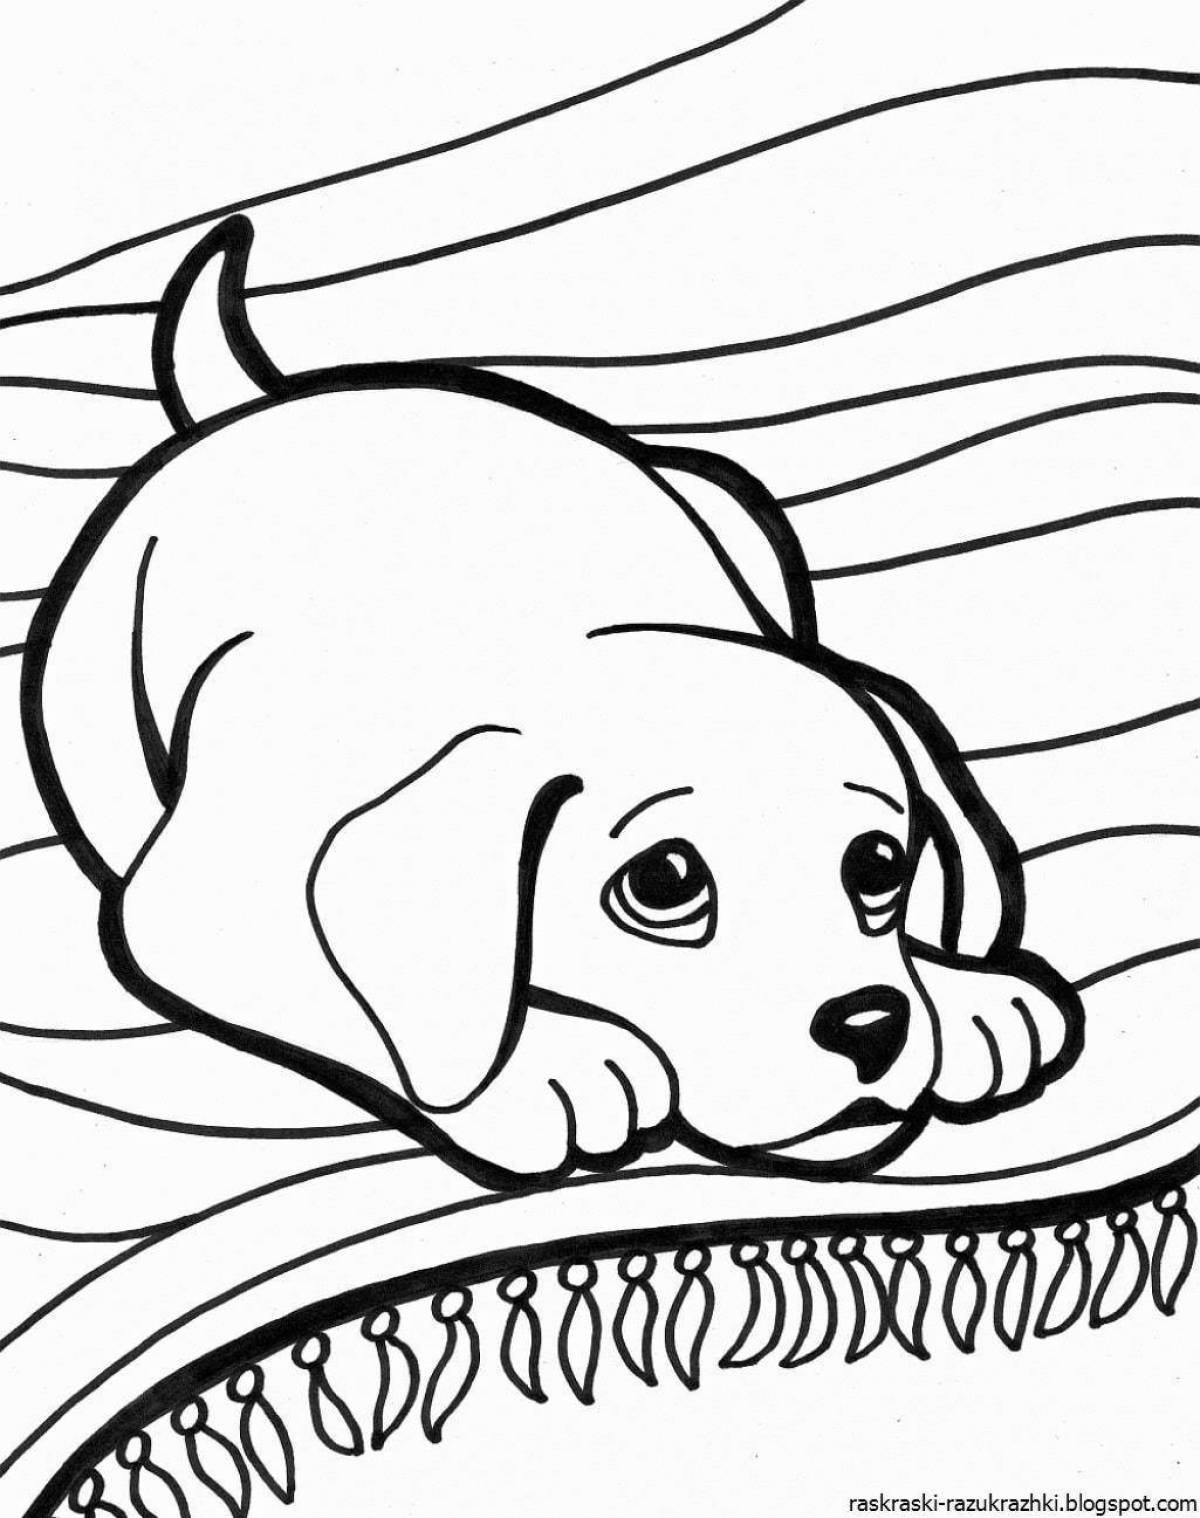 Cute domestic dog coloring book